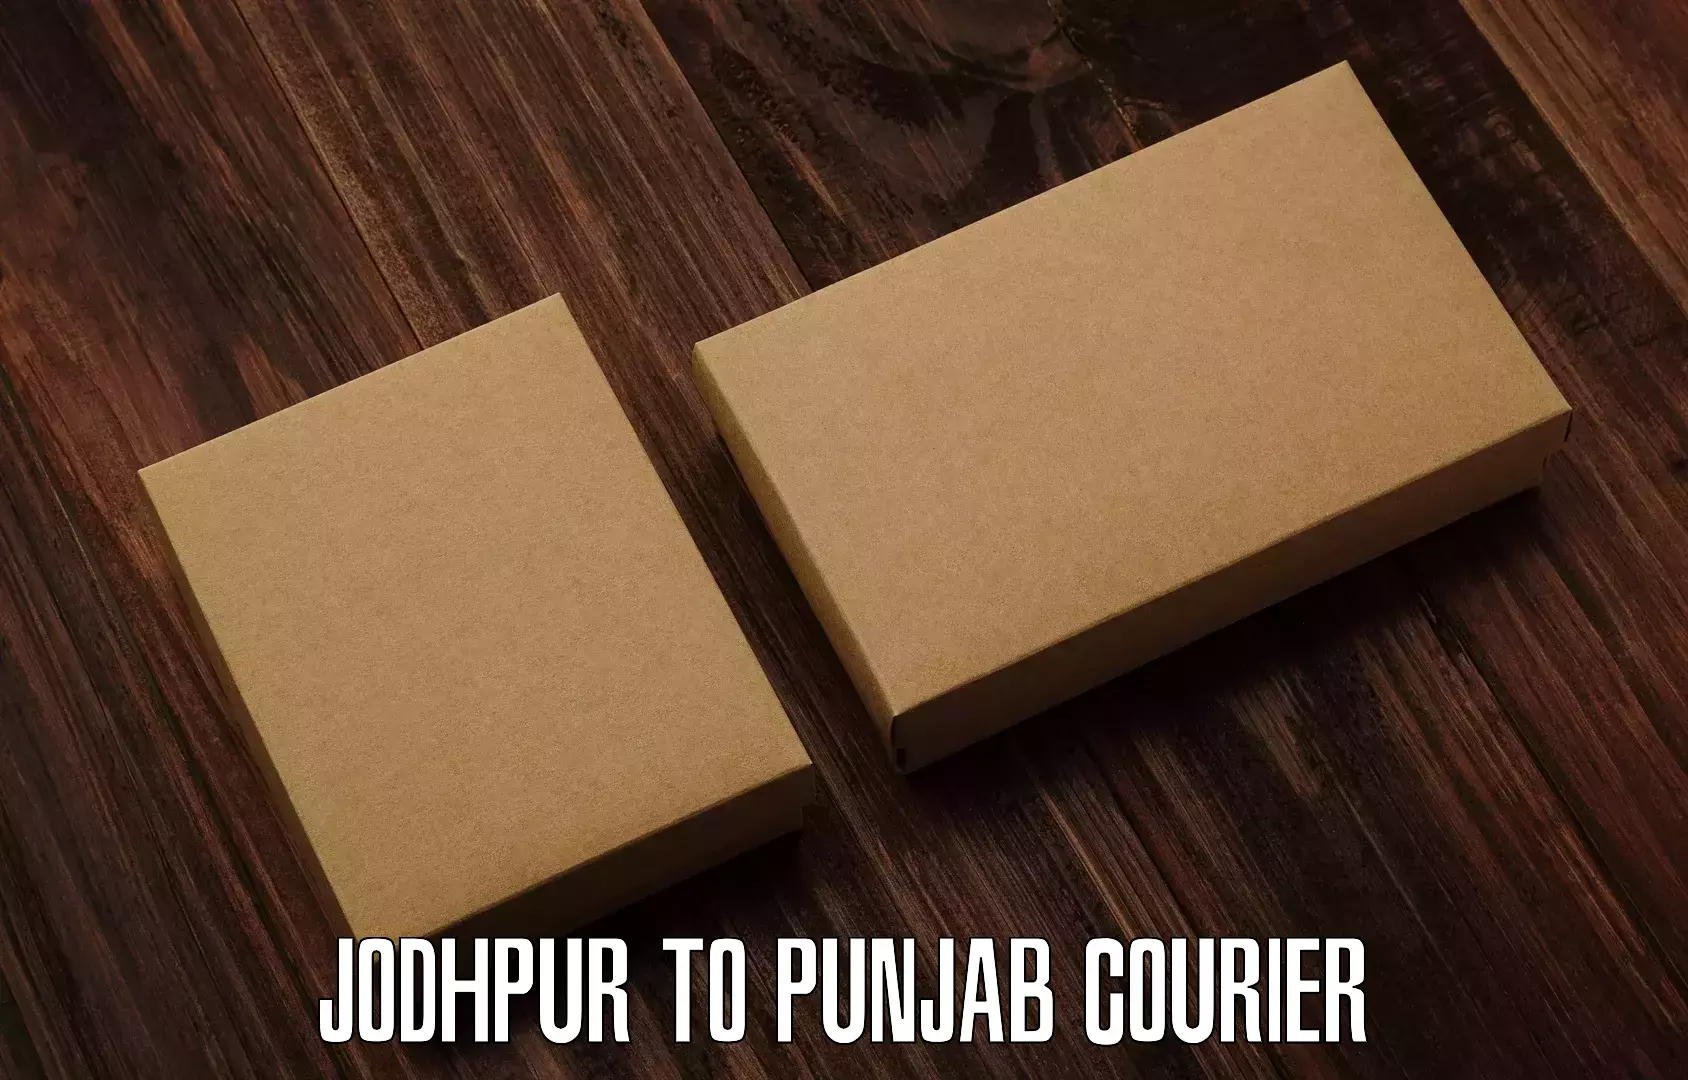 Individual parcel service Jodhpur to Jalalabad